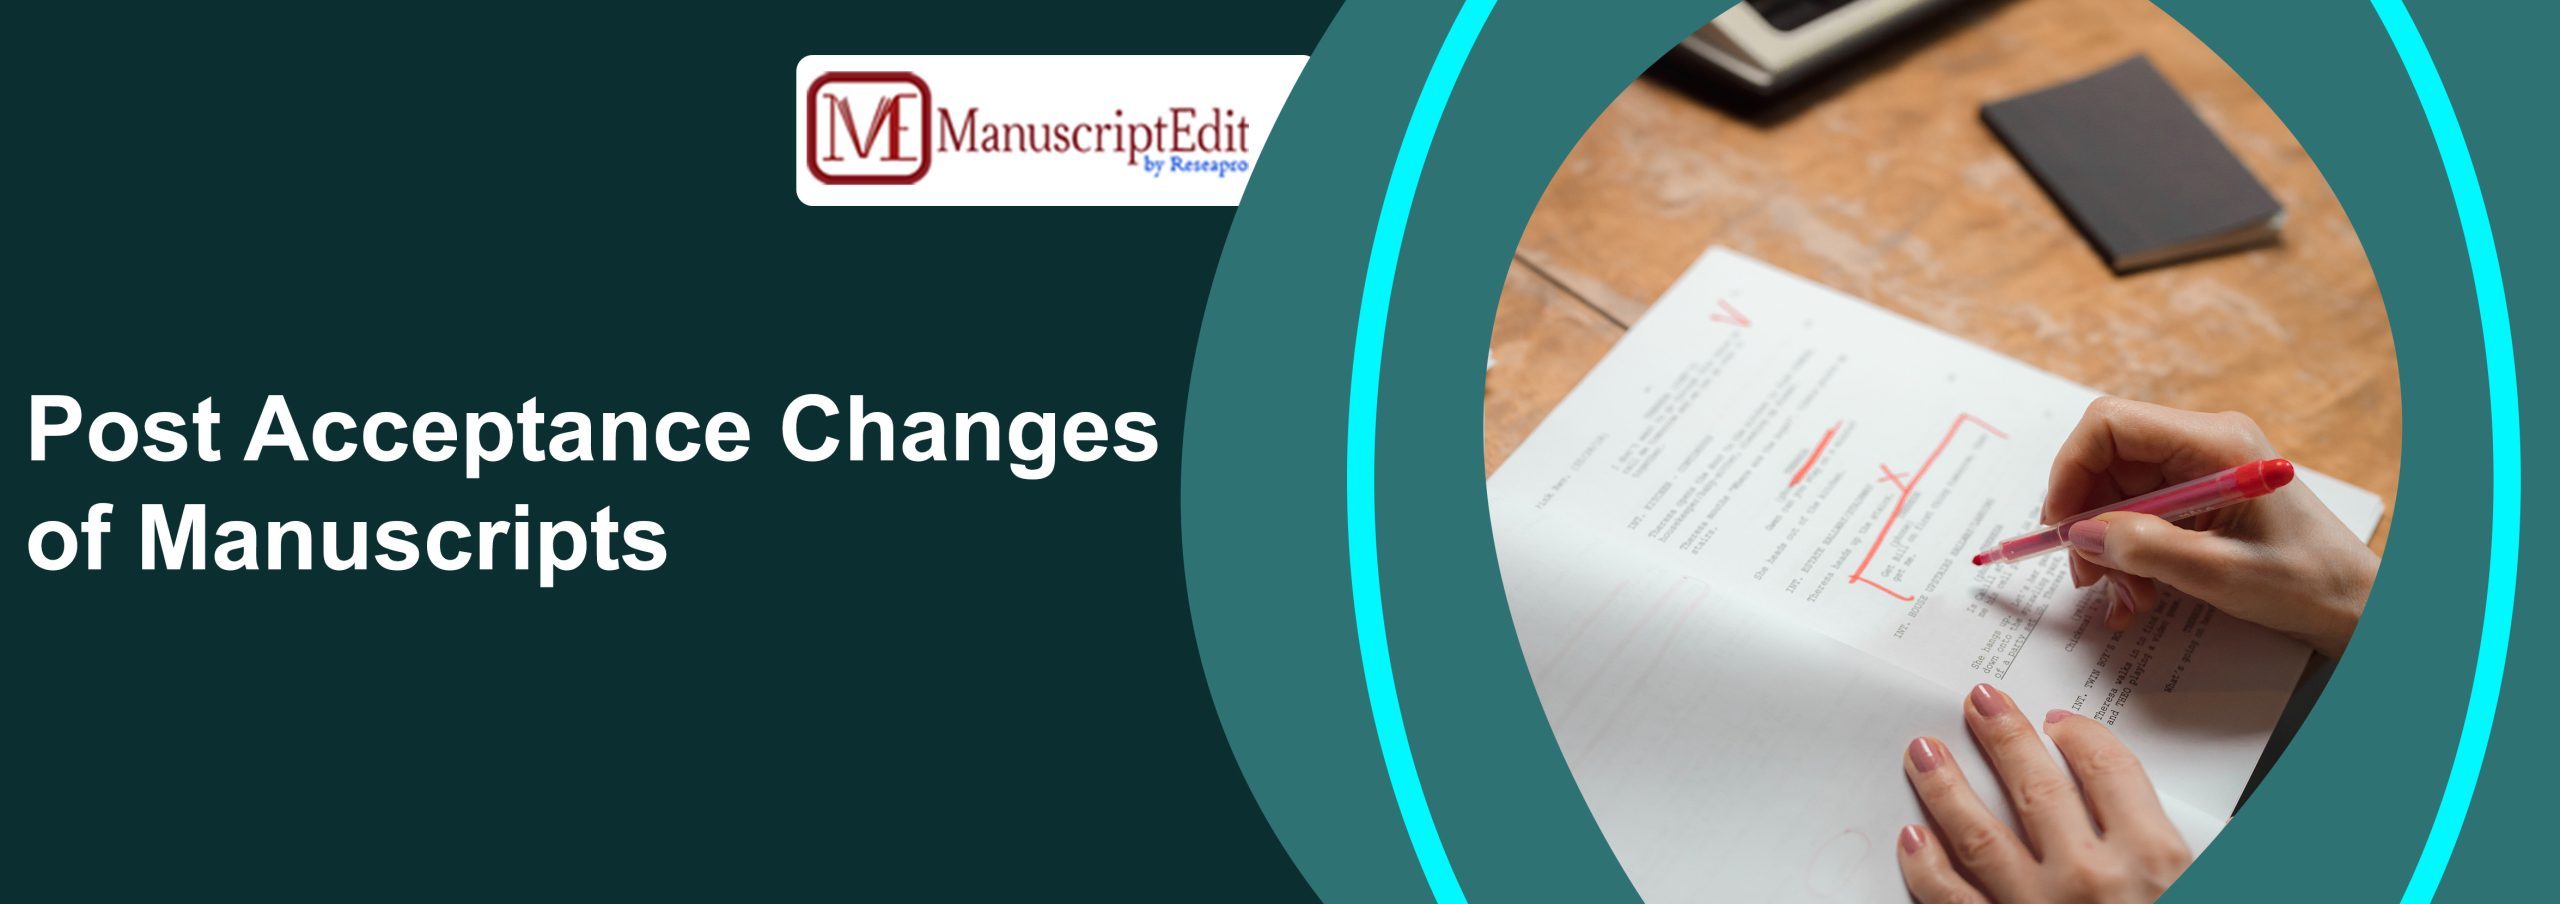 Post Acceptance Changes of Manuscripts